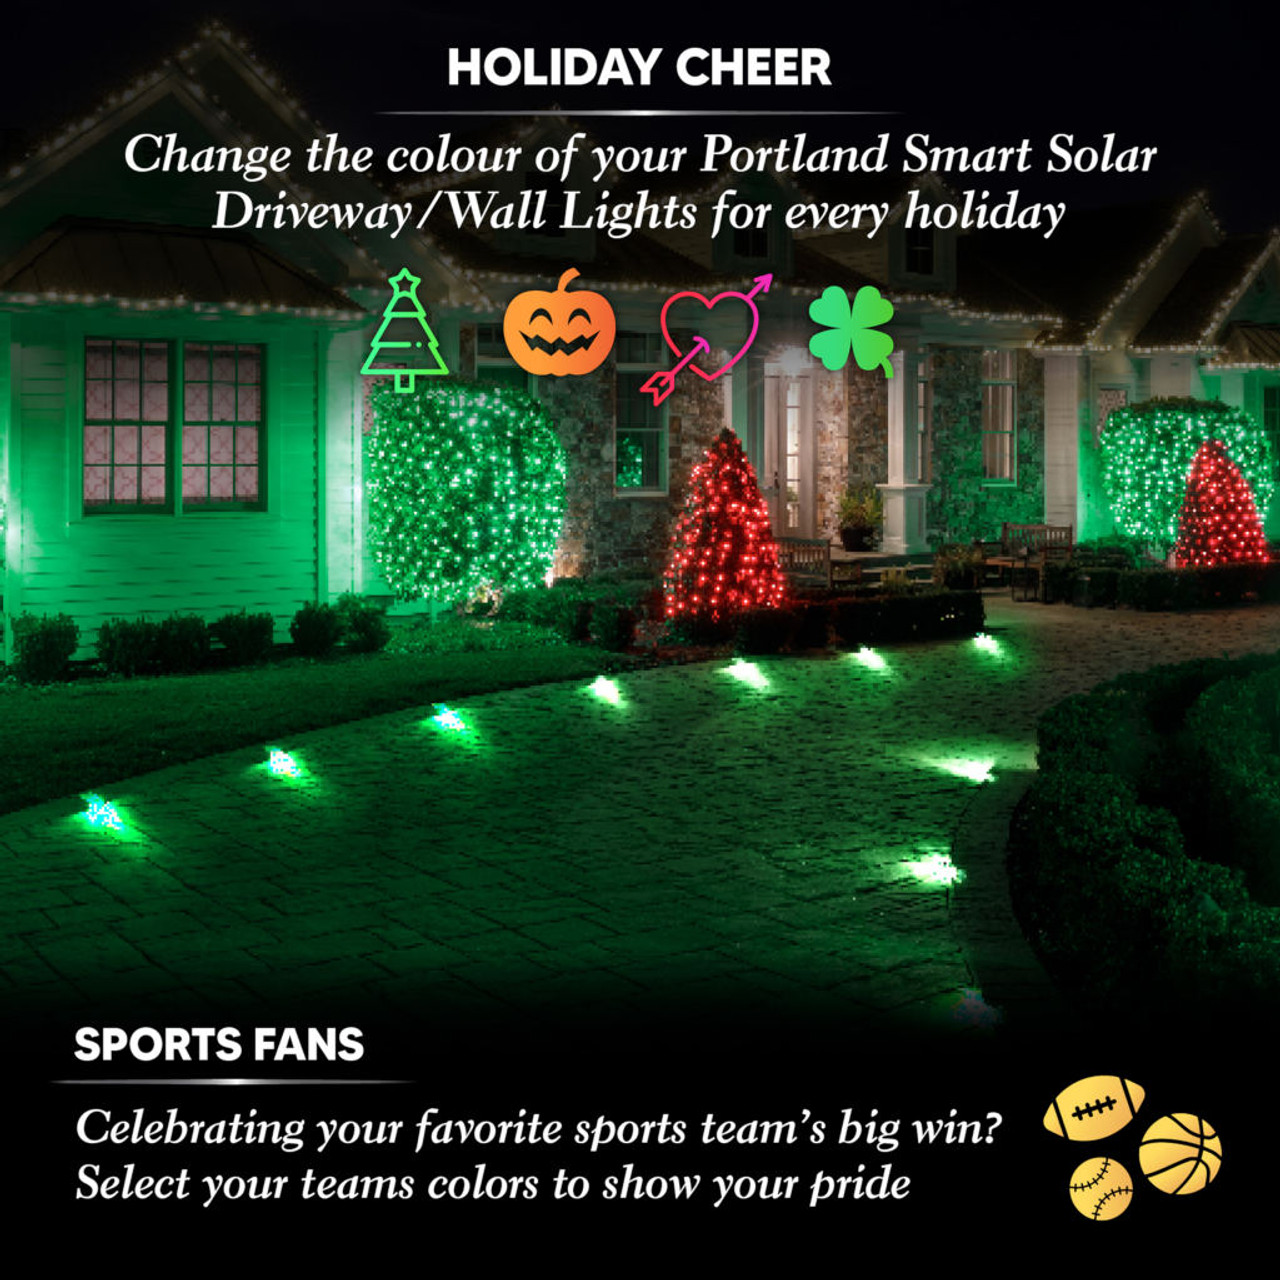 Portland Smart Solar Driveway/Wall Light from Classy Caps Holiday Lighting